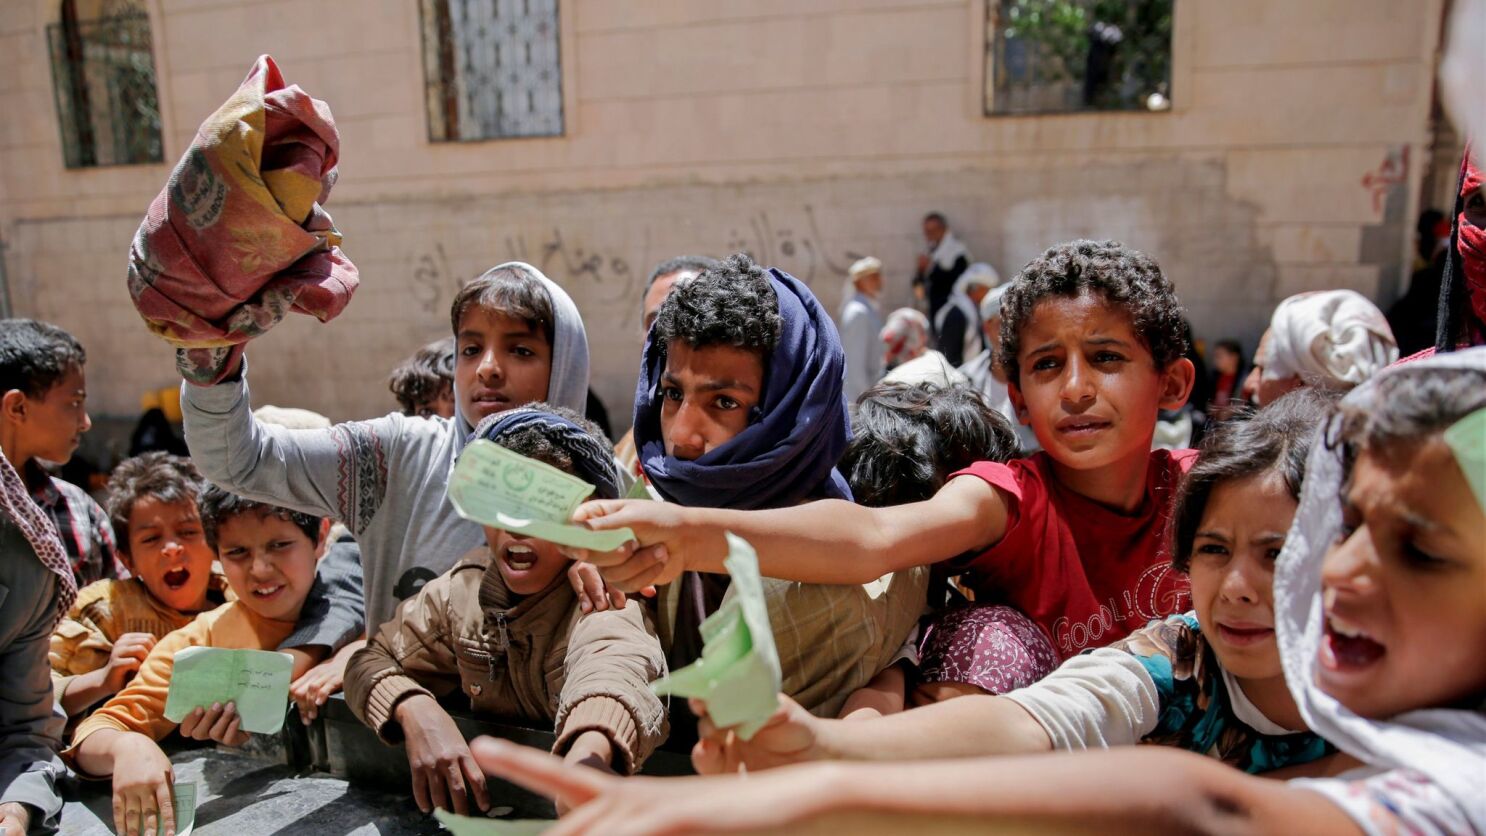 Having devastated Yemen in bombing campaign, Saudi Arabia pledges $1.5  billion in humanitarian aid - Los Angeles Times